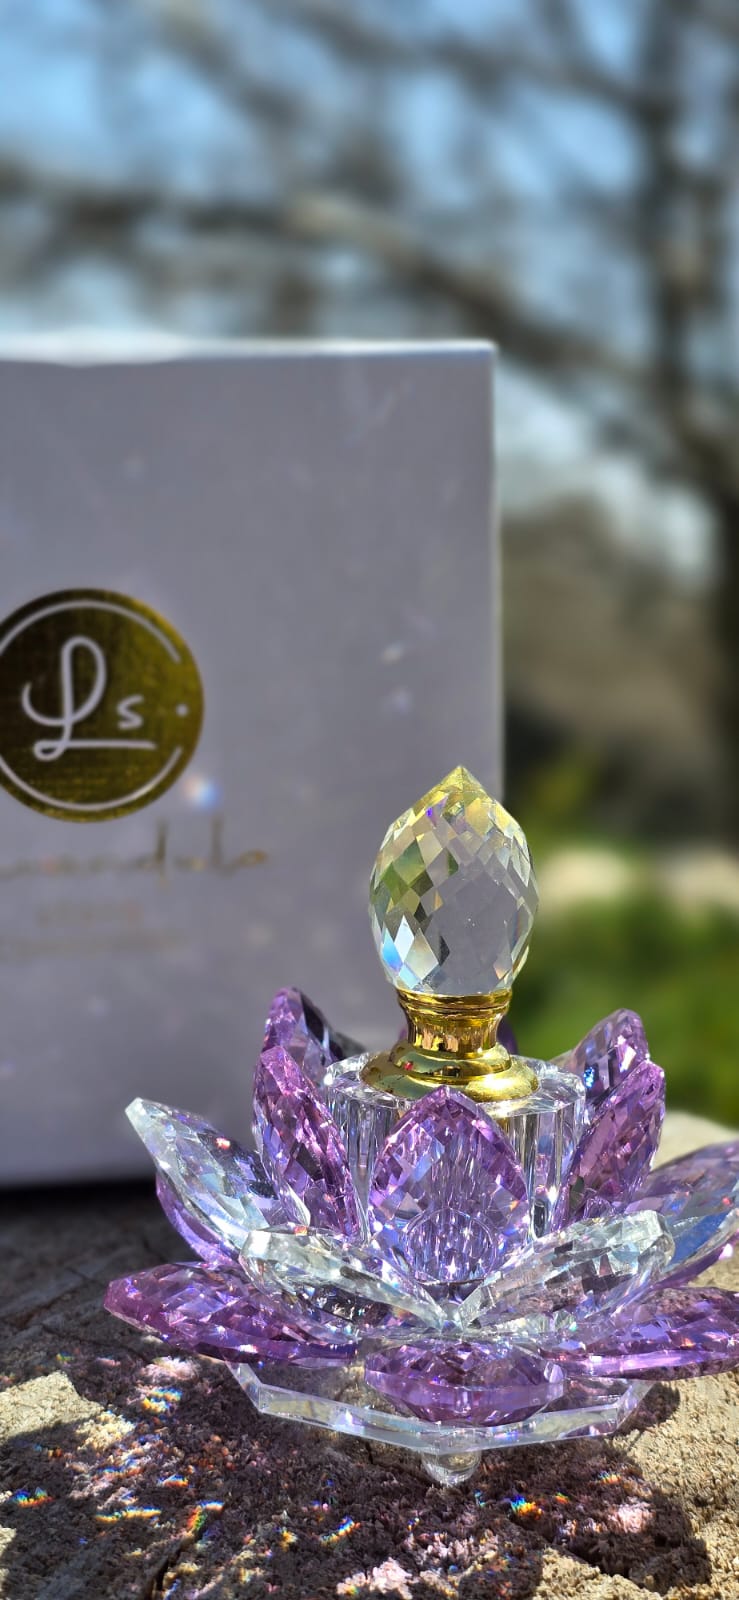 Lotus crystal flowers with(Midnight) parfum from lavandulastore